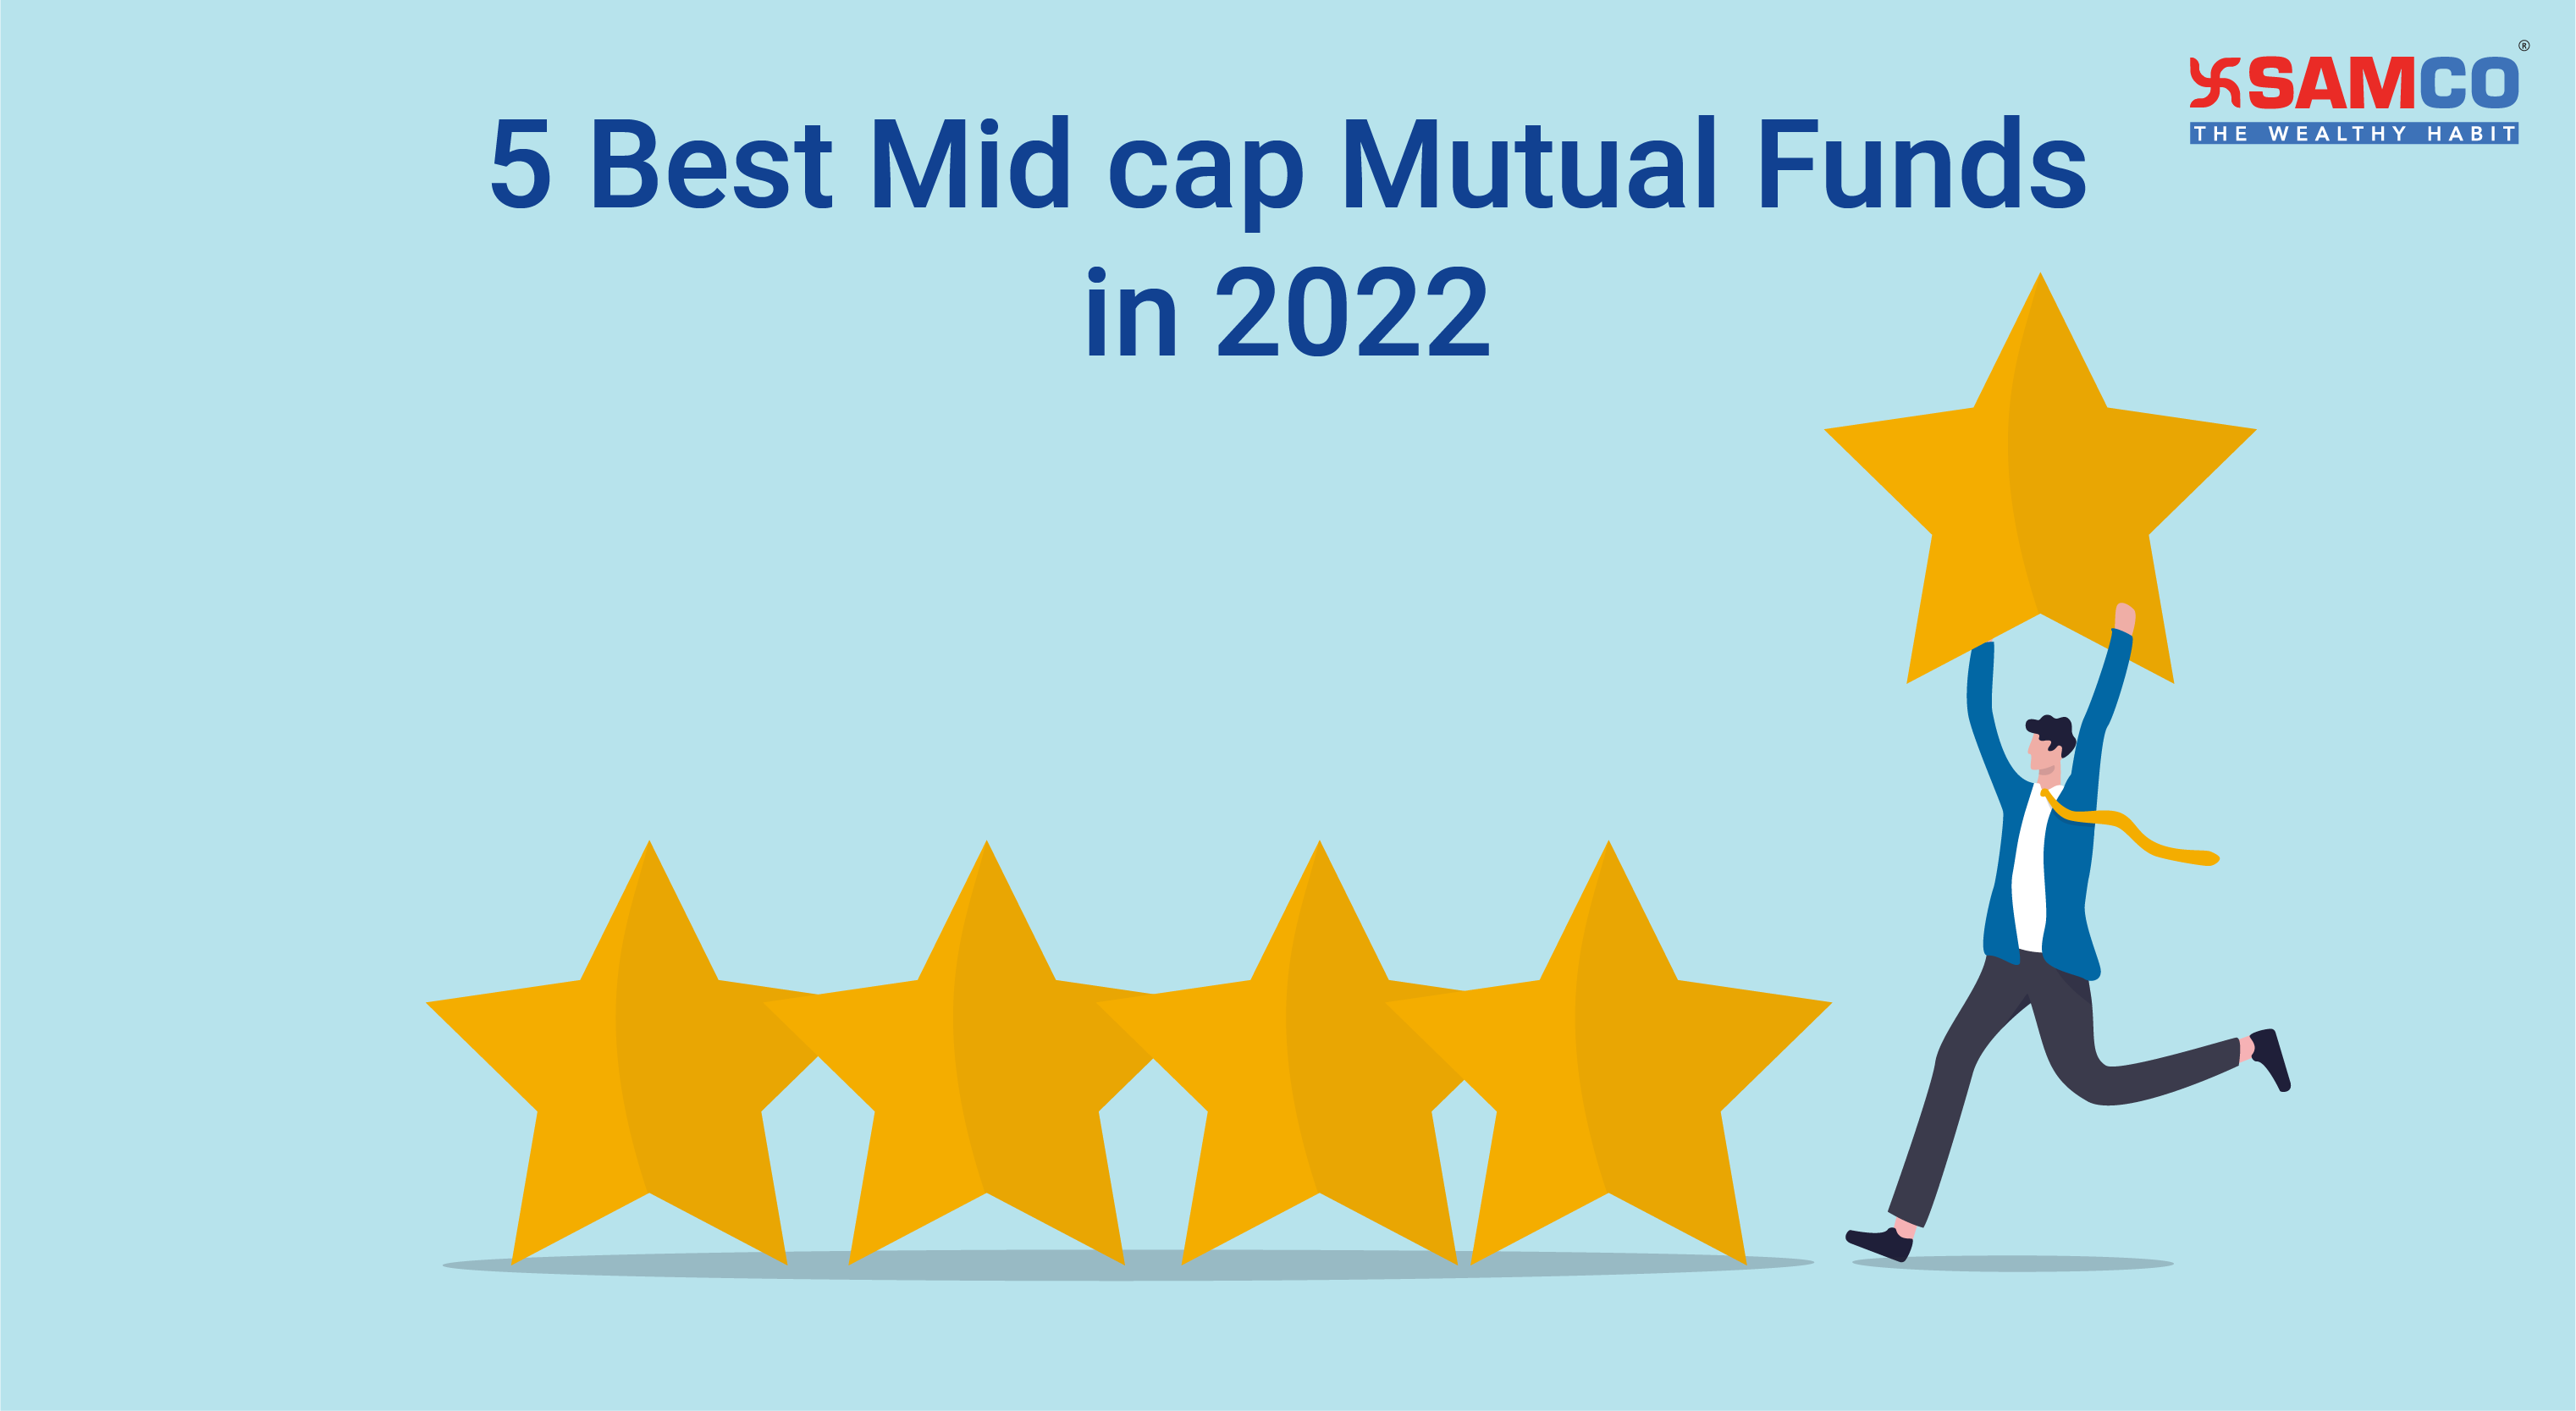 5 Best Mid cap Mutual Funds in 2022